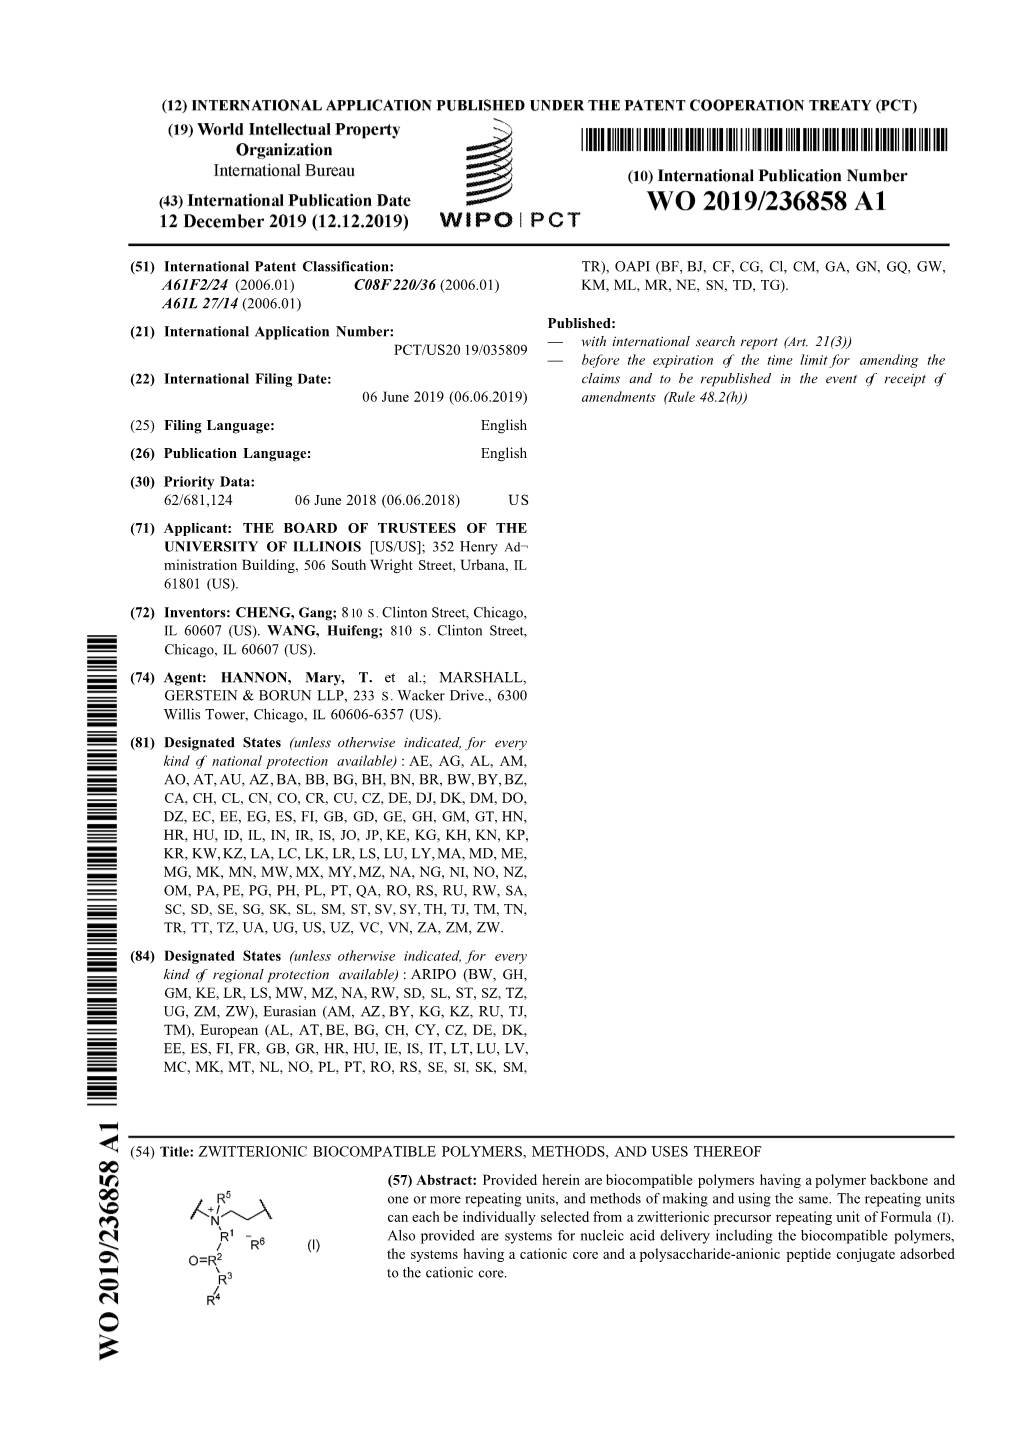 ) (51) International Patent Classification: TR), OAPI (BF, BJ